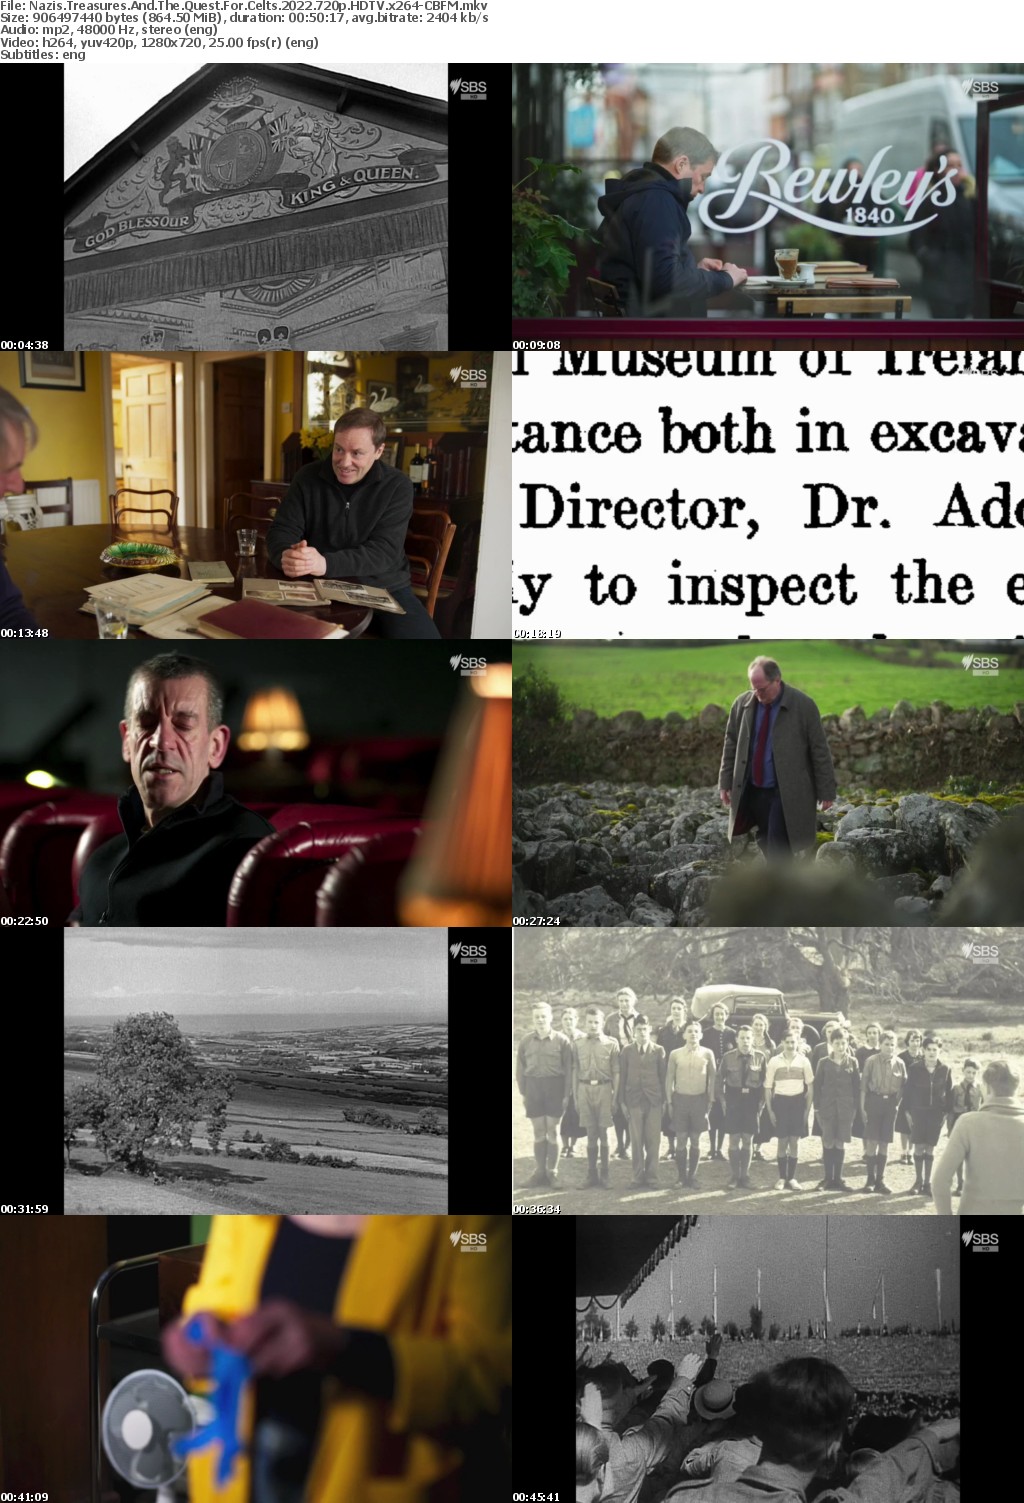 Nazis Treasures And The Quest For Celts 2022 720p HDTV x264-CBFM